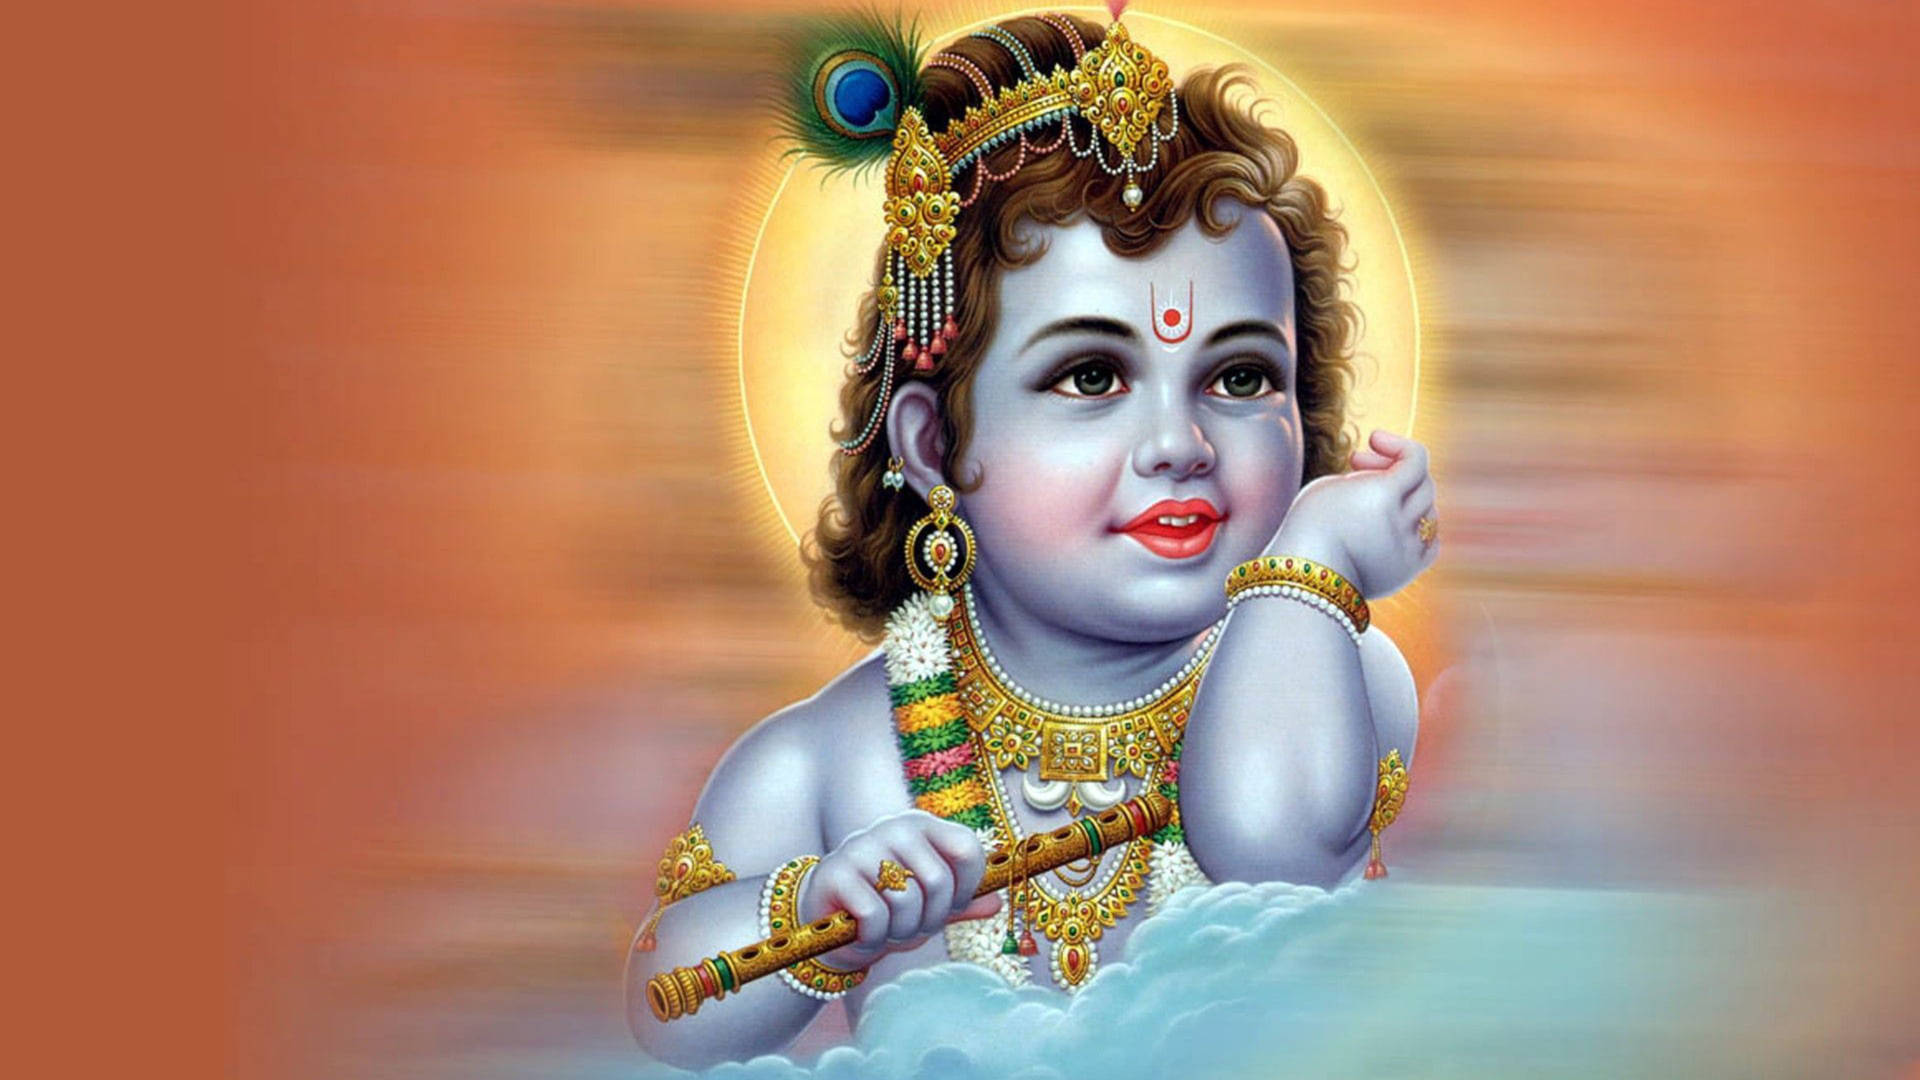 Portrait Of Baby Krishna 4k Wallpaper